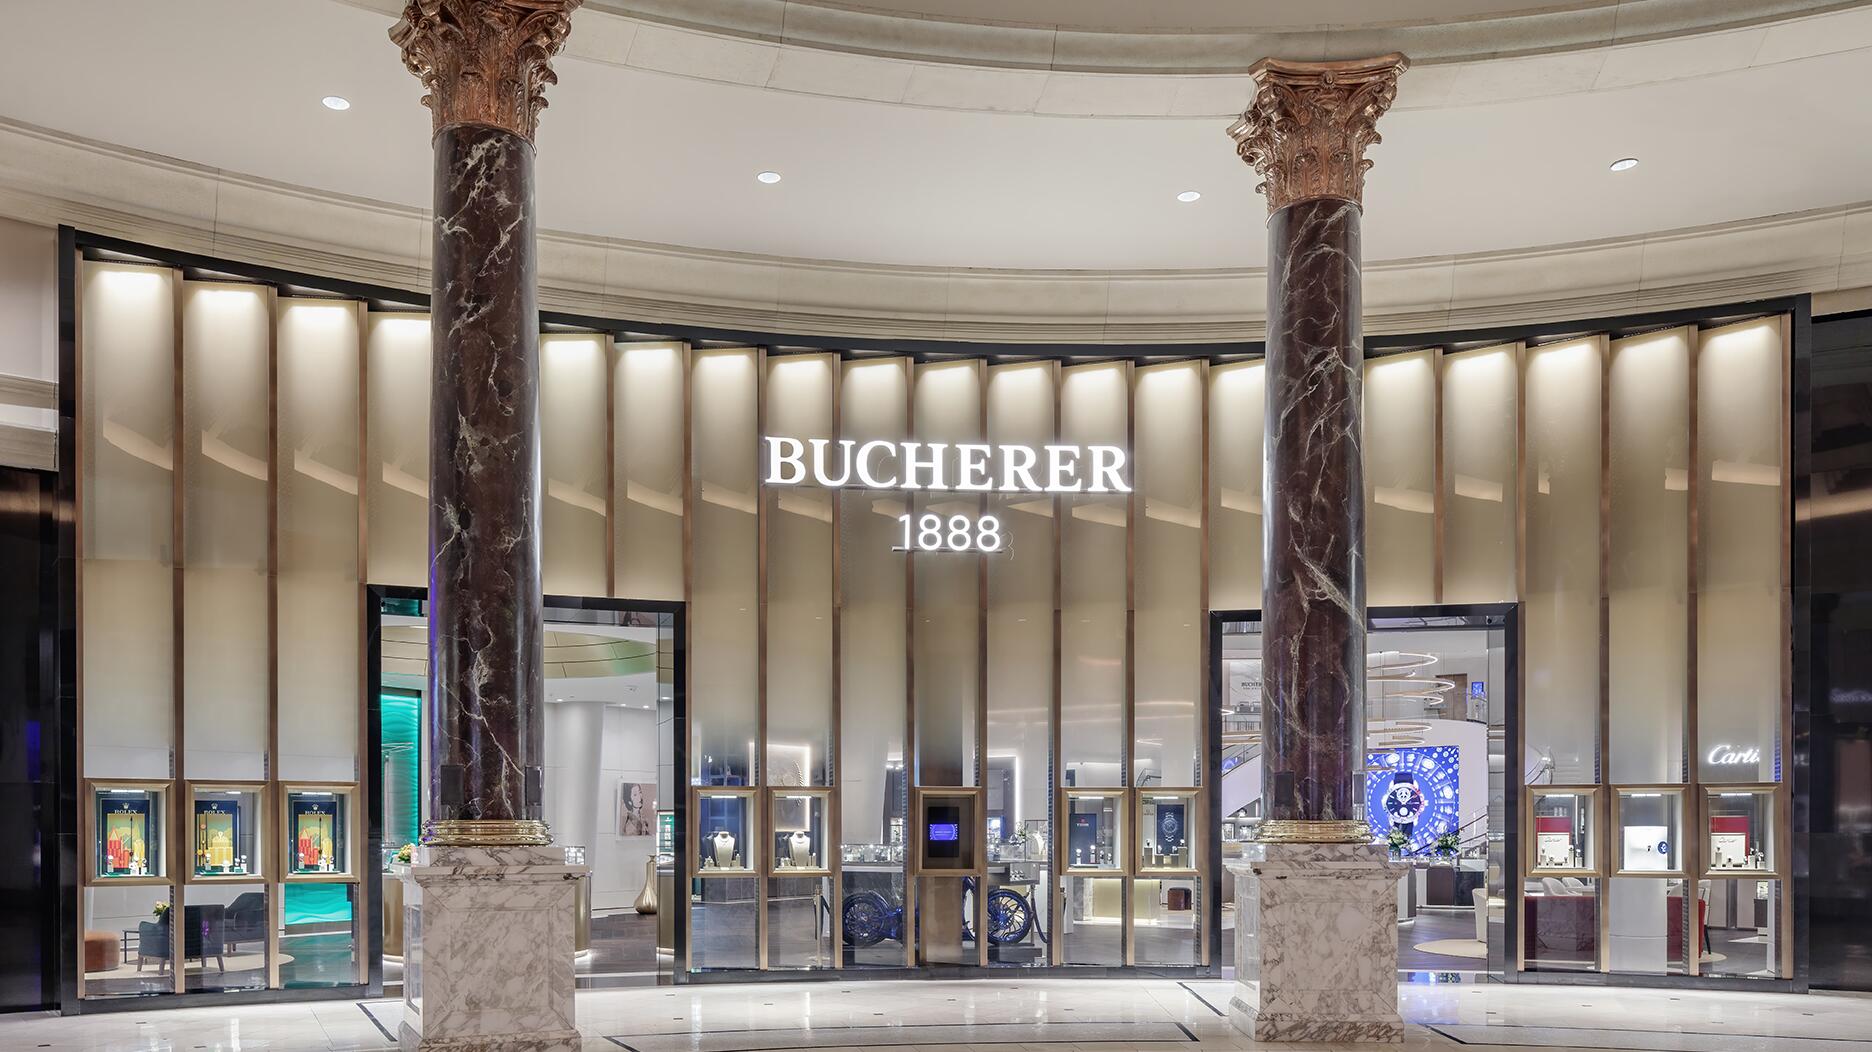 The Bucherer 1888 TimeDome store in Las Vegas